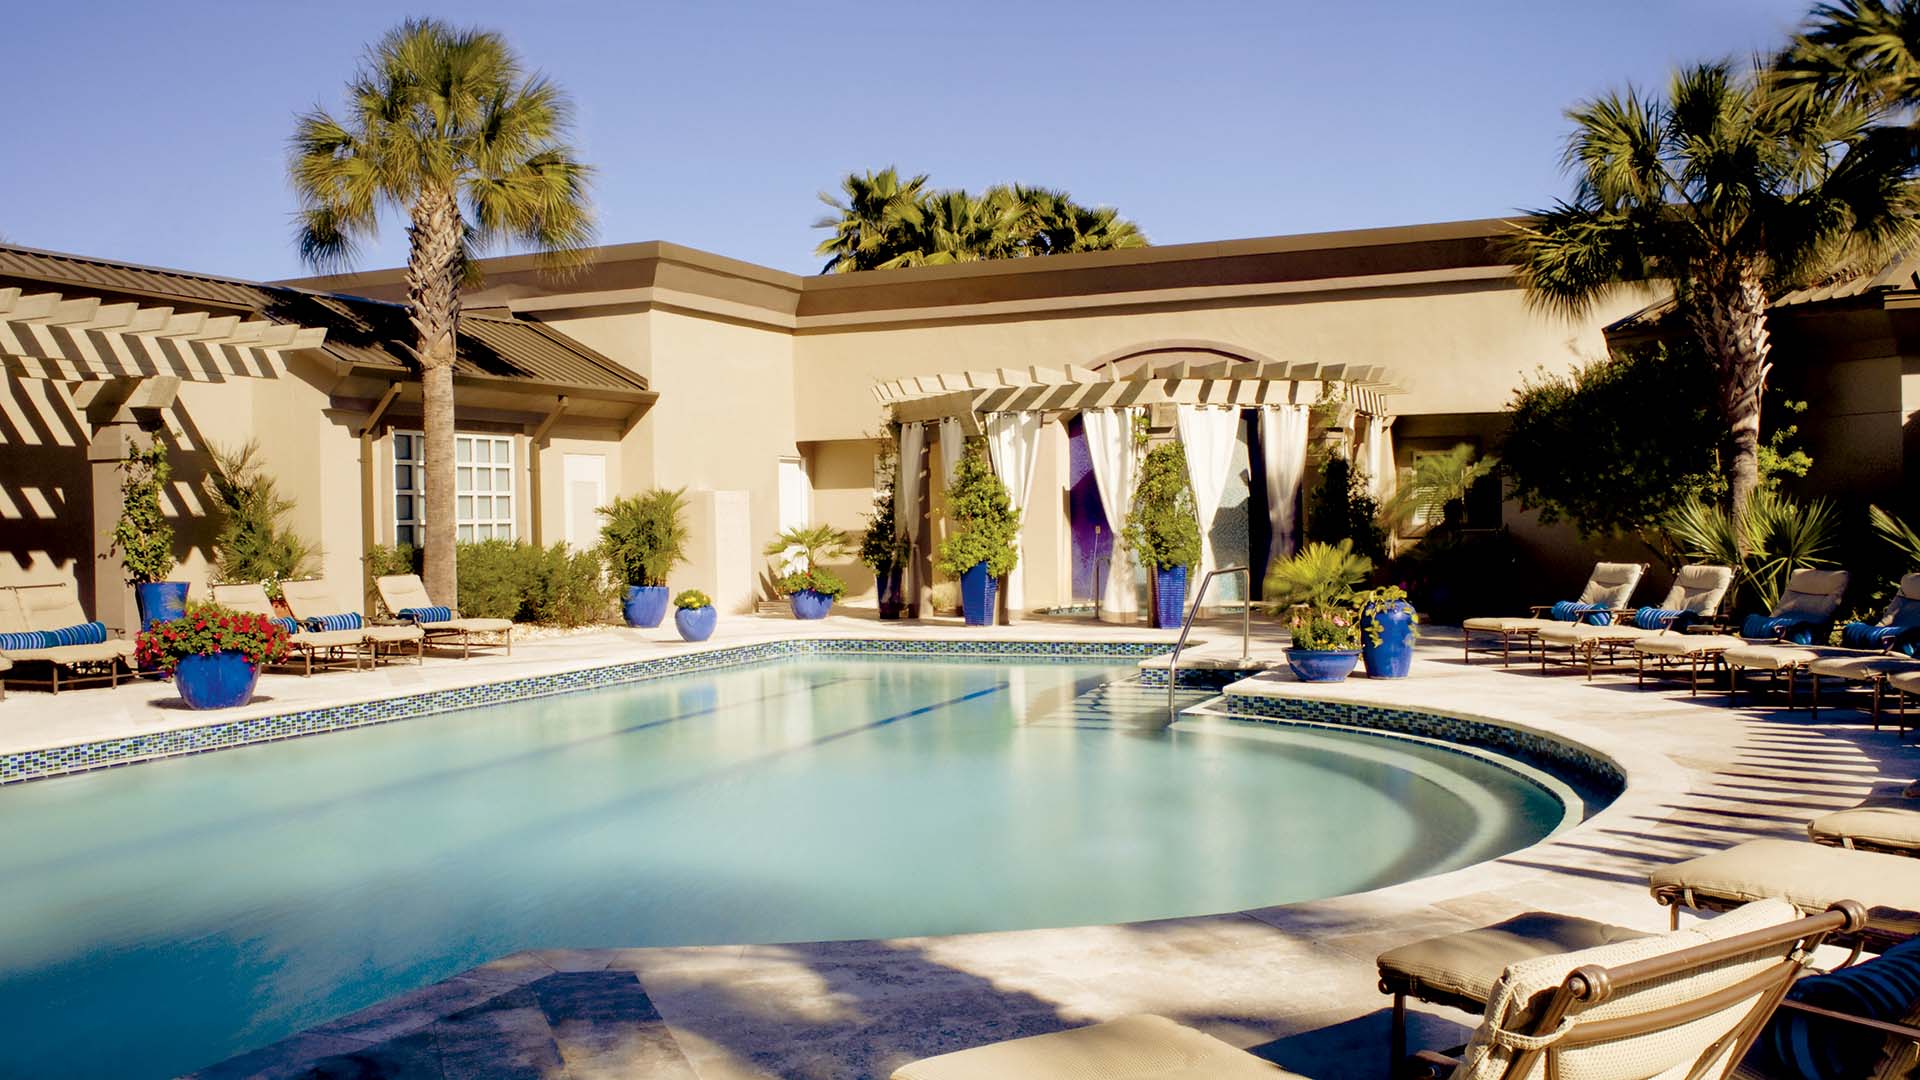 Spa pool at The Ritz-Carlton, Amelia Island in Florida